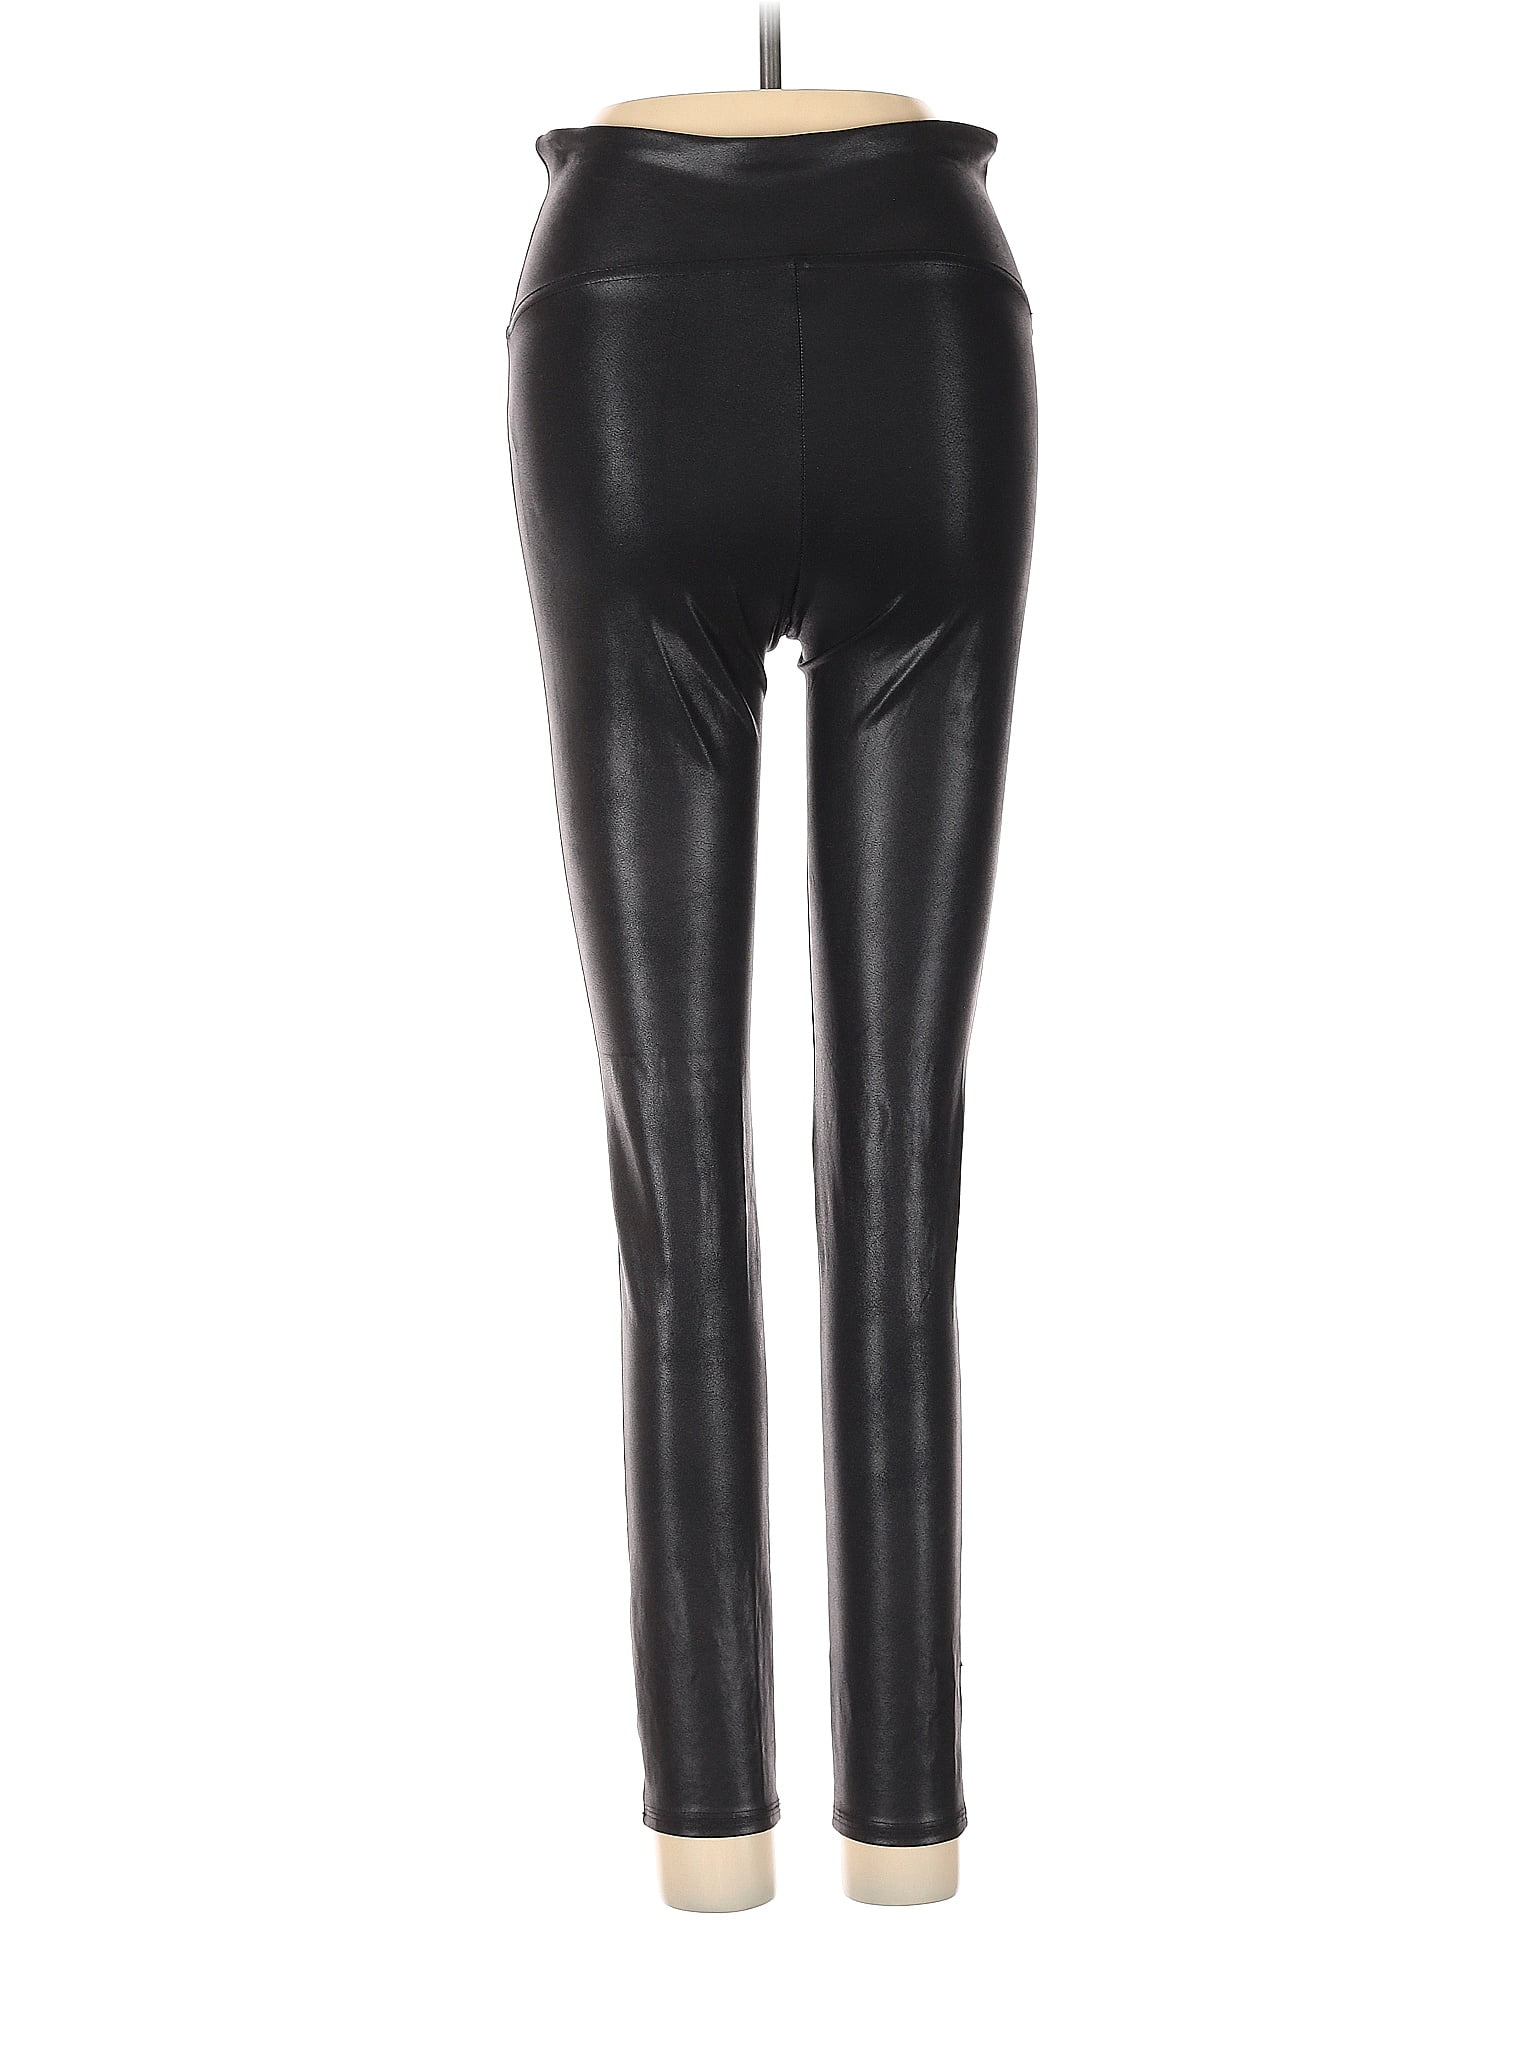 SPANX Black Leggings Size 1X (Plus) - 64% off